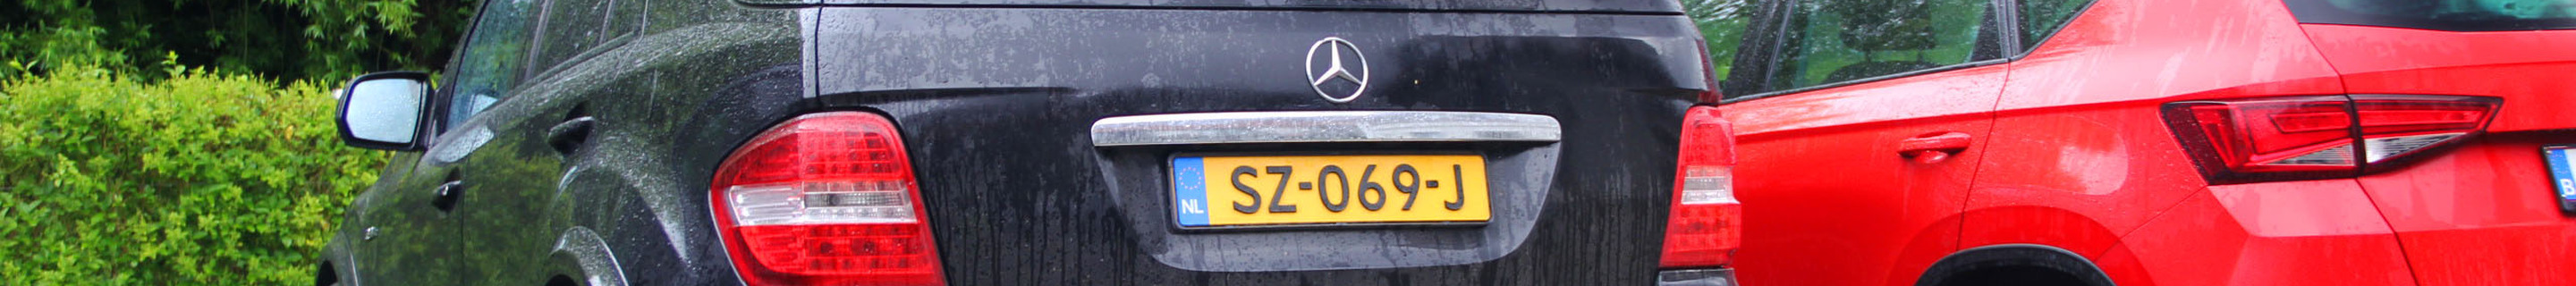 Mercedes-Benz ML 63 AMG W164 2009